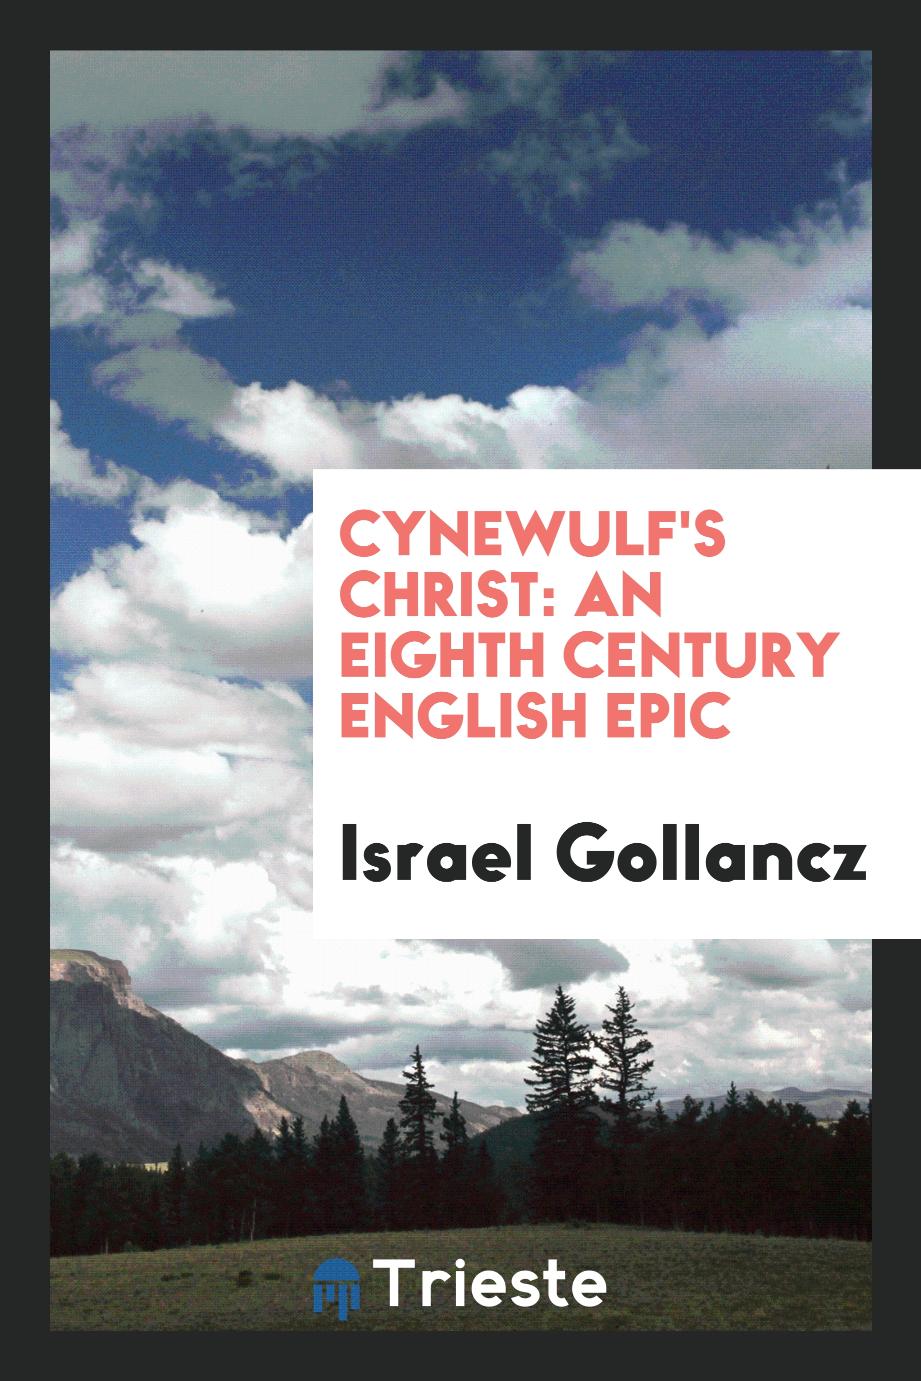 Cynewulf's Christ: An Eighth Century English Epic